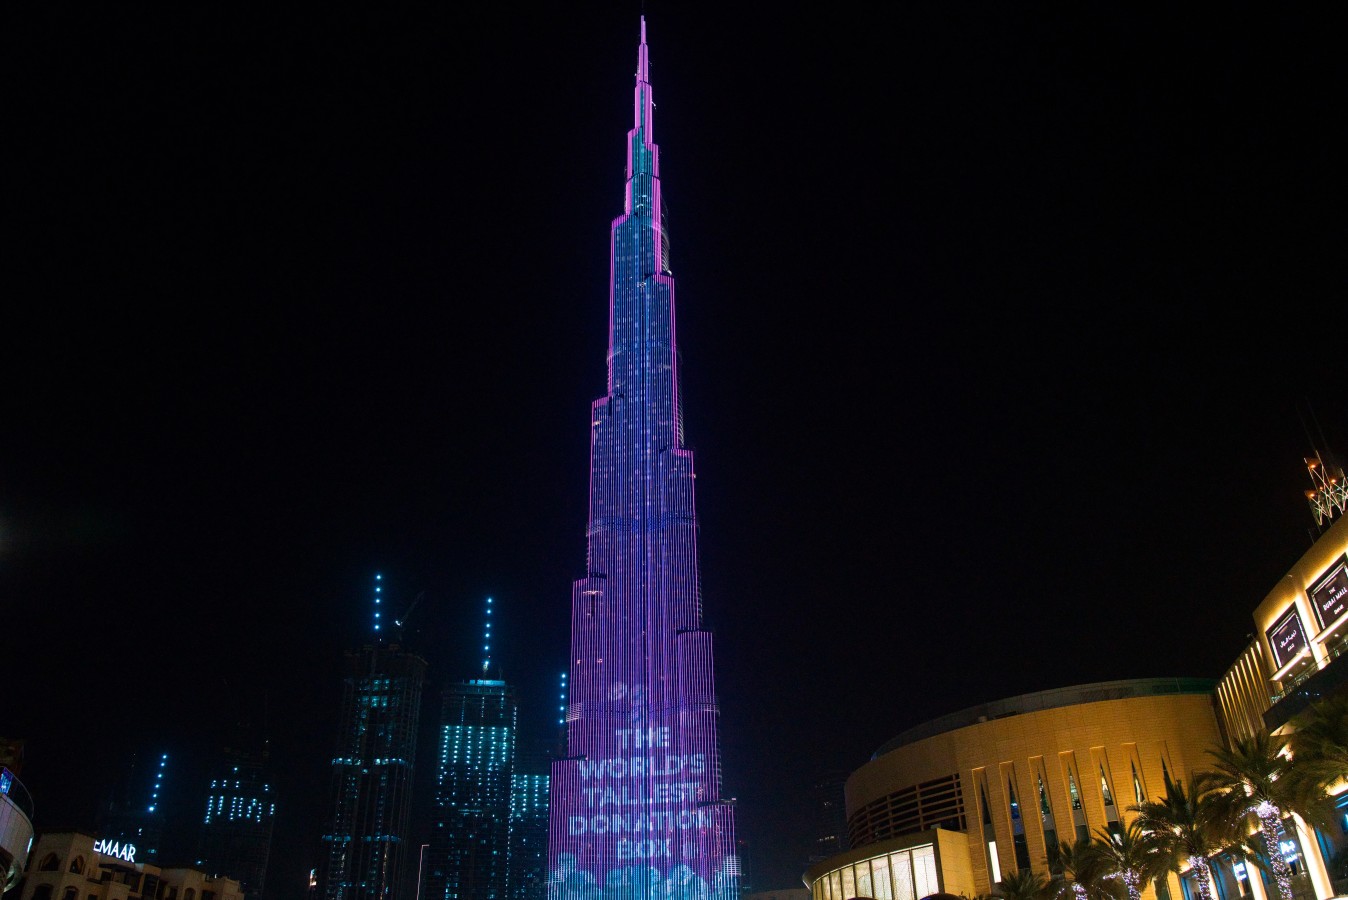 The Burj Khalifa, the world’s tallest building